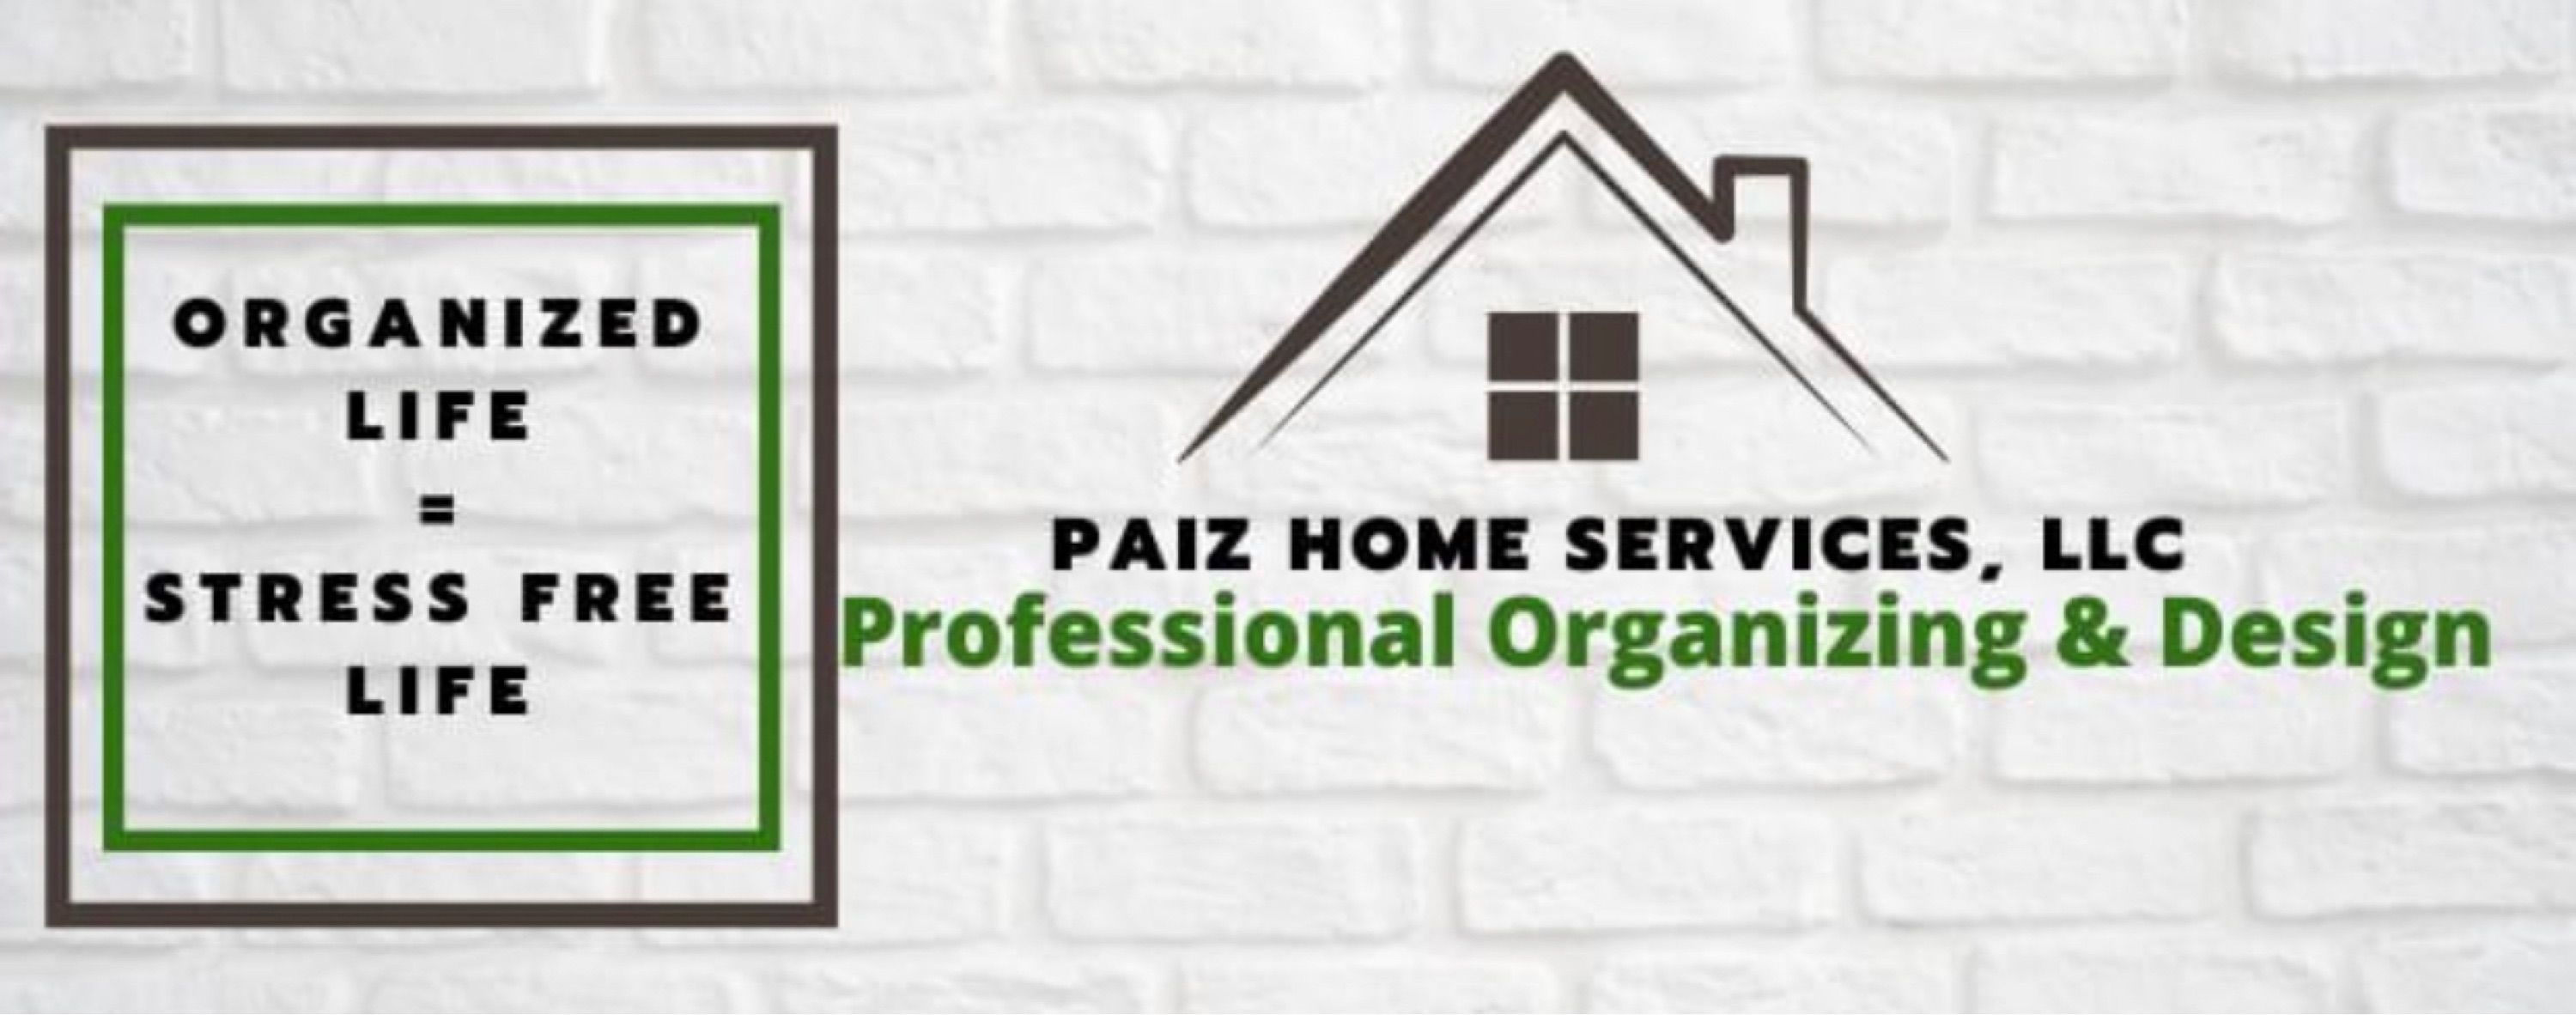 Paiz Home Services, LLC Logo